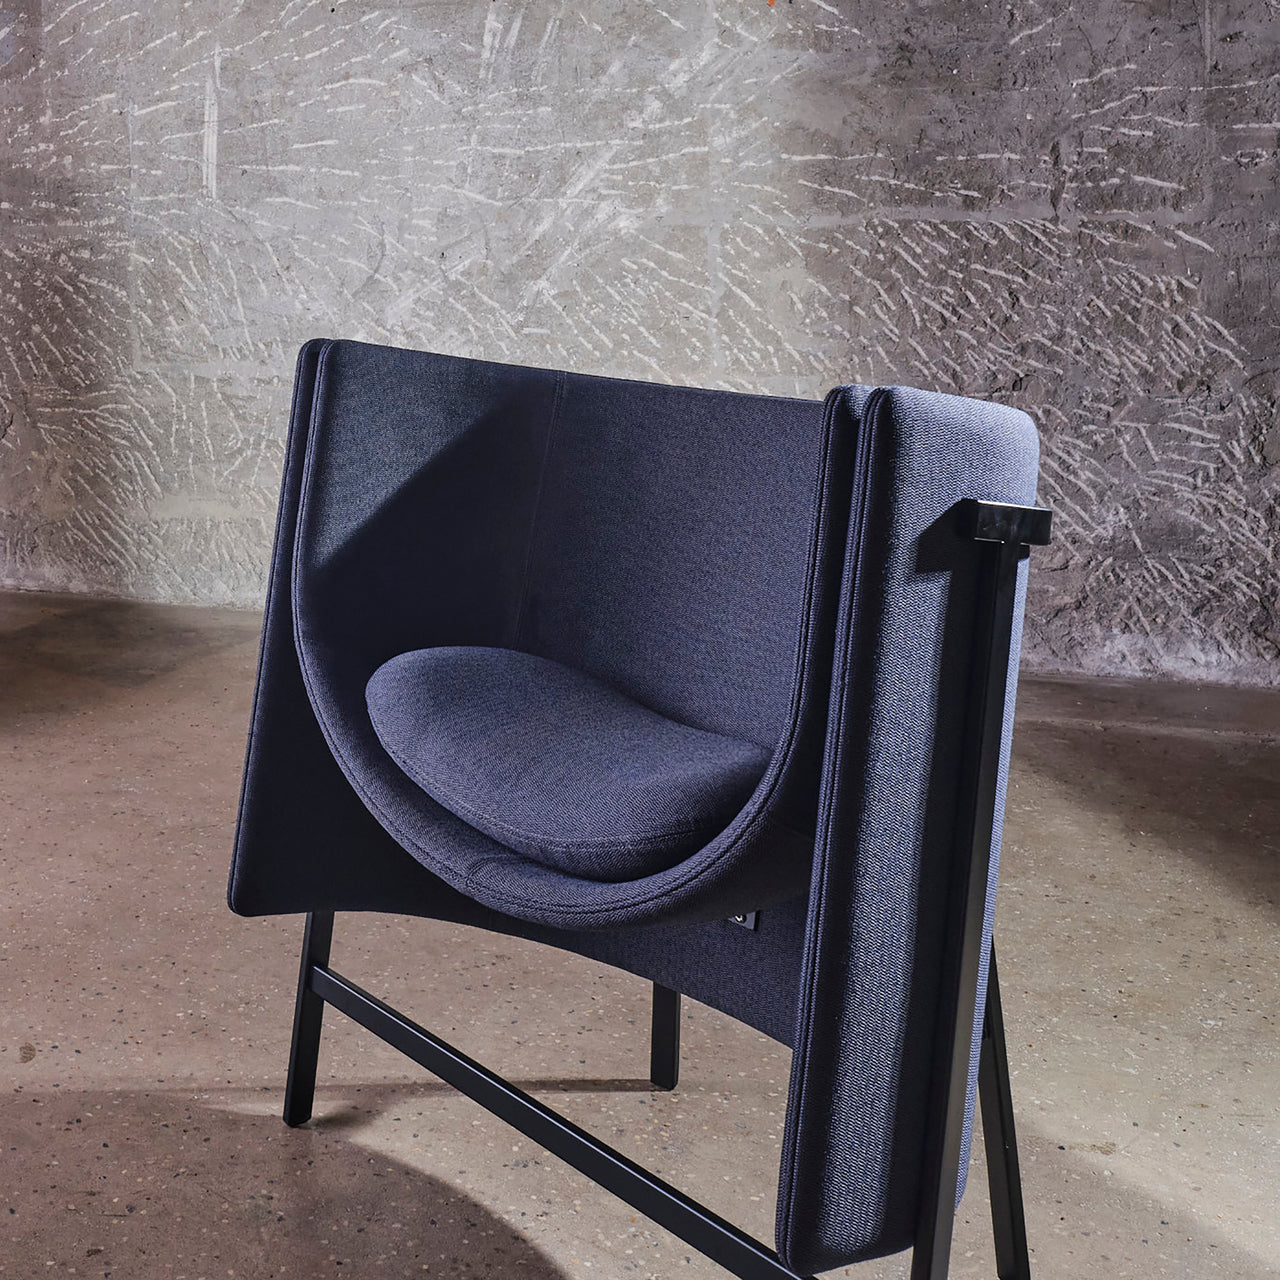 Kite Lounge Chair: Narrow